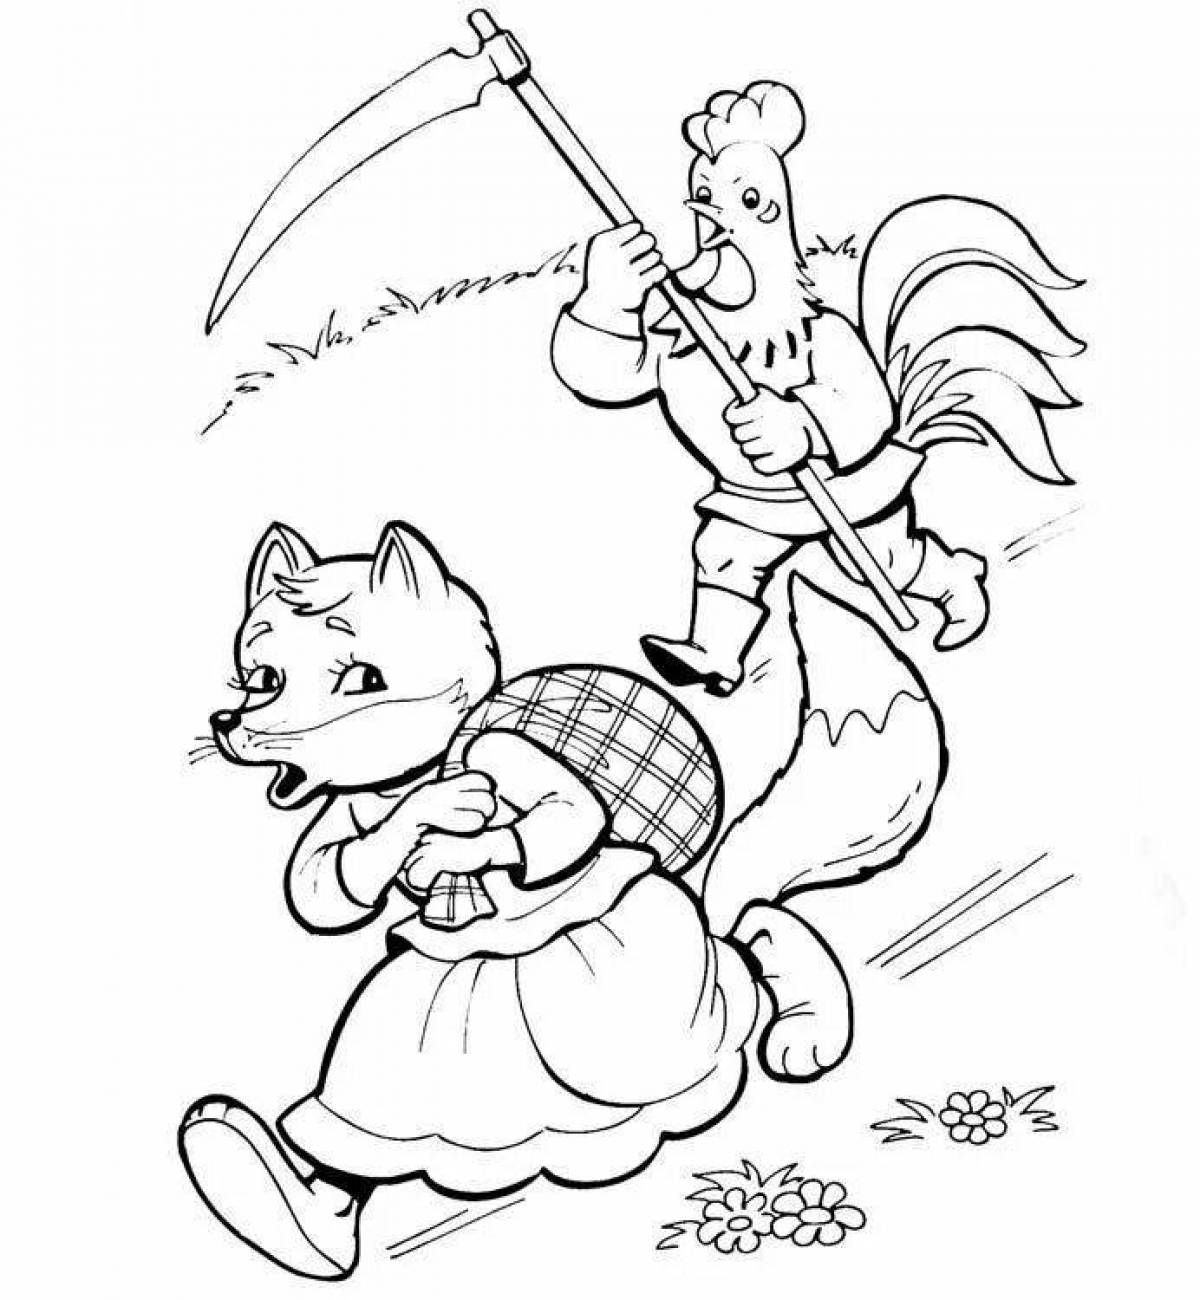 Fairy tale fox and hare #1